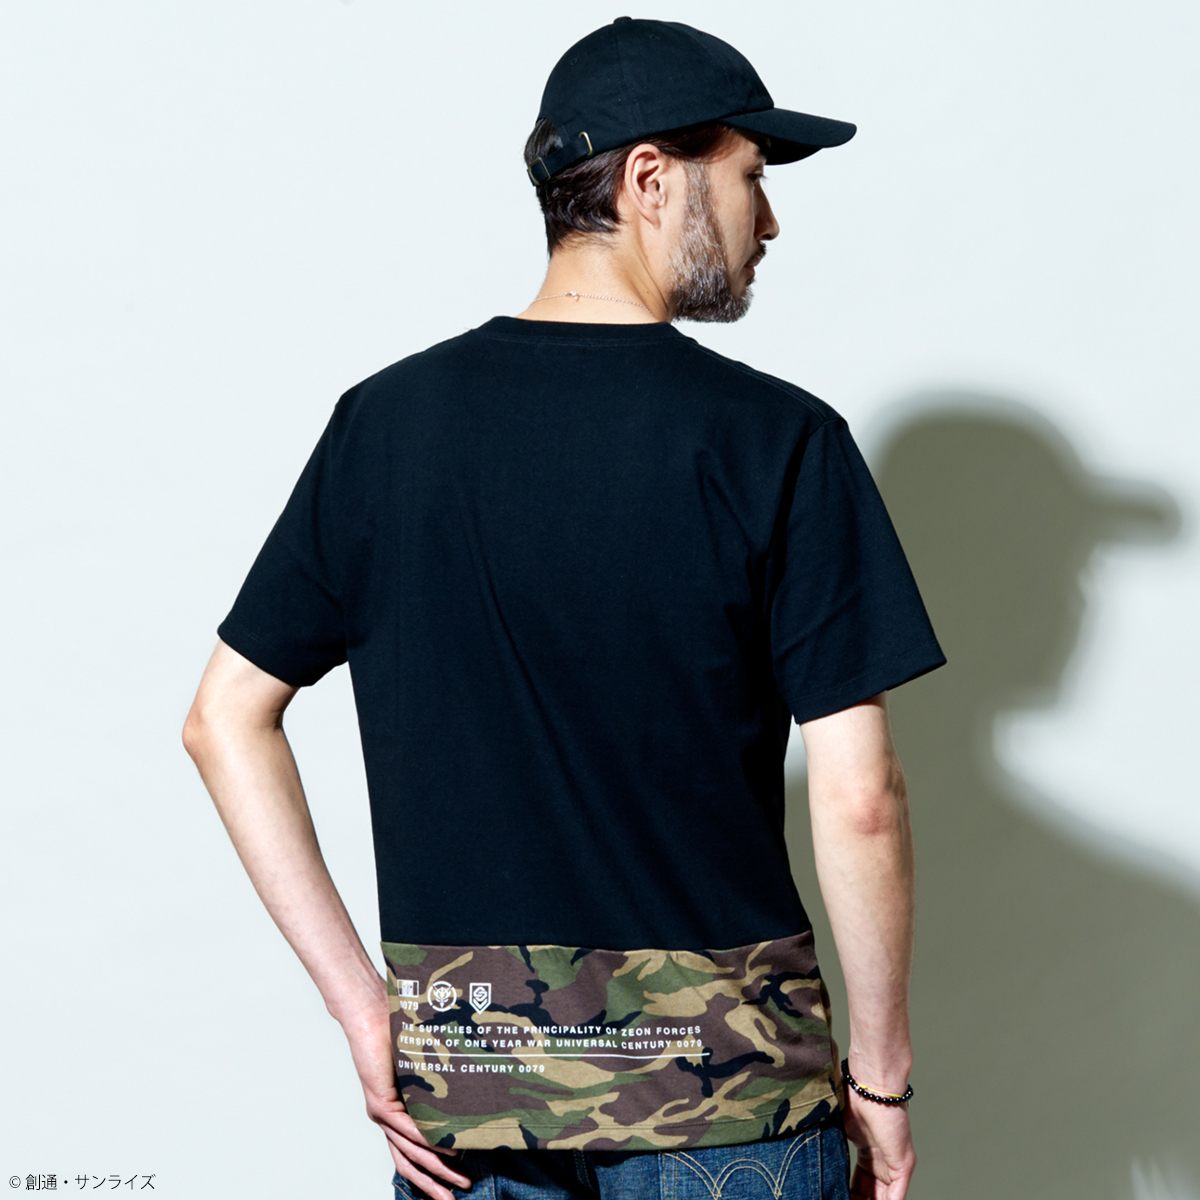 STRICT-G.ARMS『機動戦士ガンダム』 カモフラージュ裾切替Tシャツ ZEON FORCES